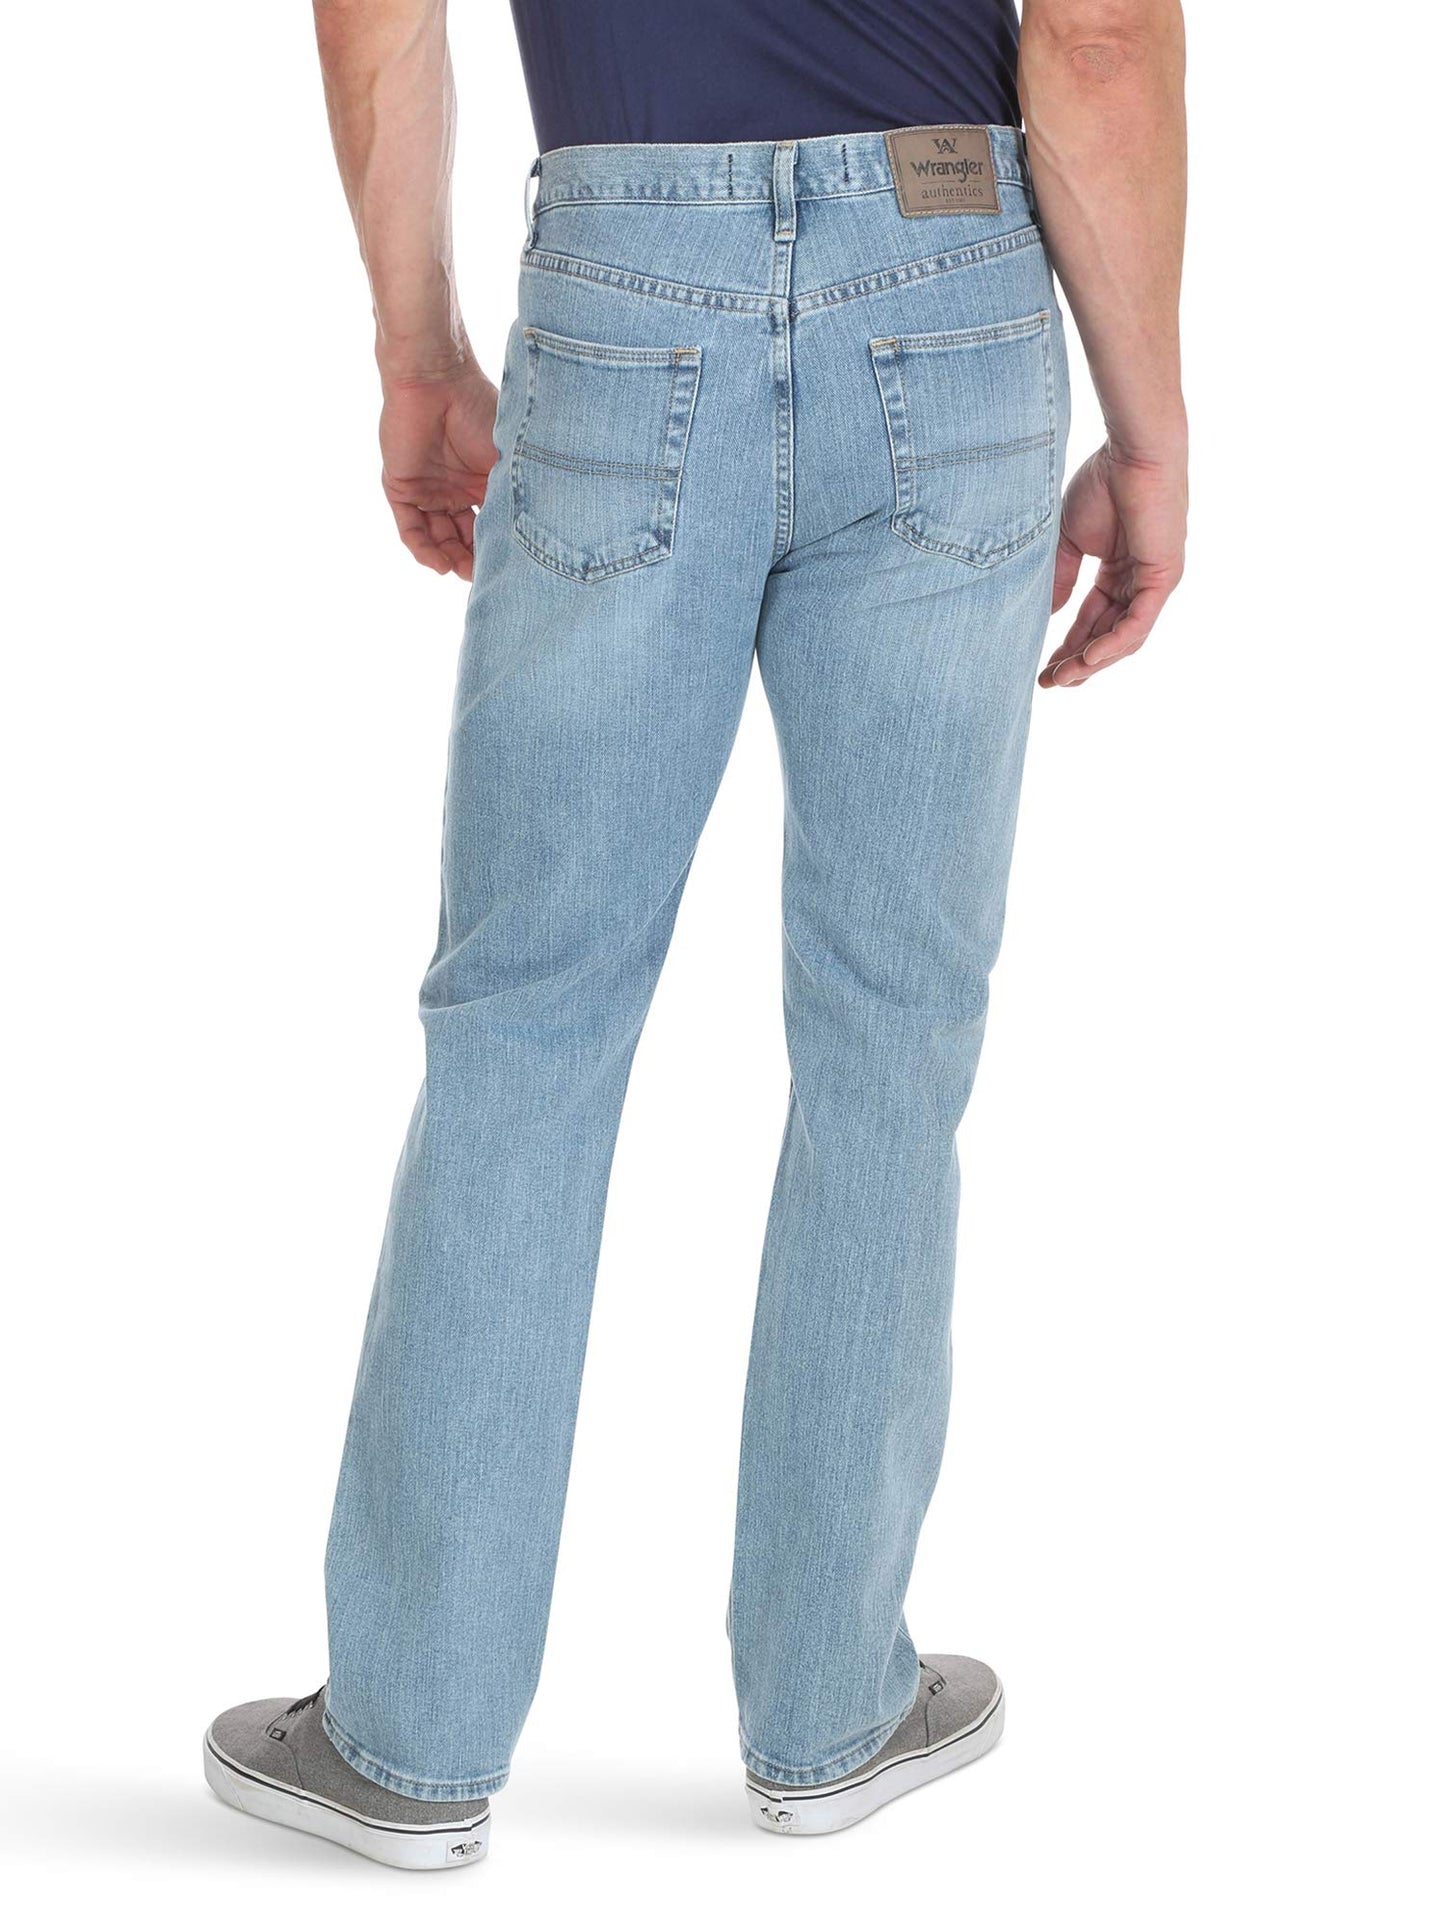 Wrangler Authentics Men's Classic 5-Pocket Regular Fit Jean, Stonewash Flex, 33W x 30L